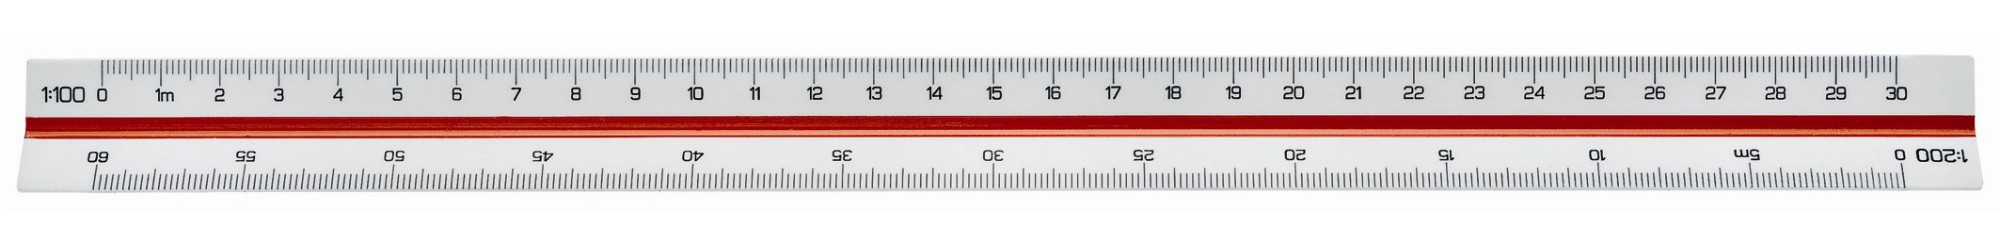 Linex Triangular Scale Ruler 1:1-500 30cm White LXH 312